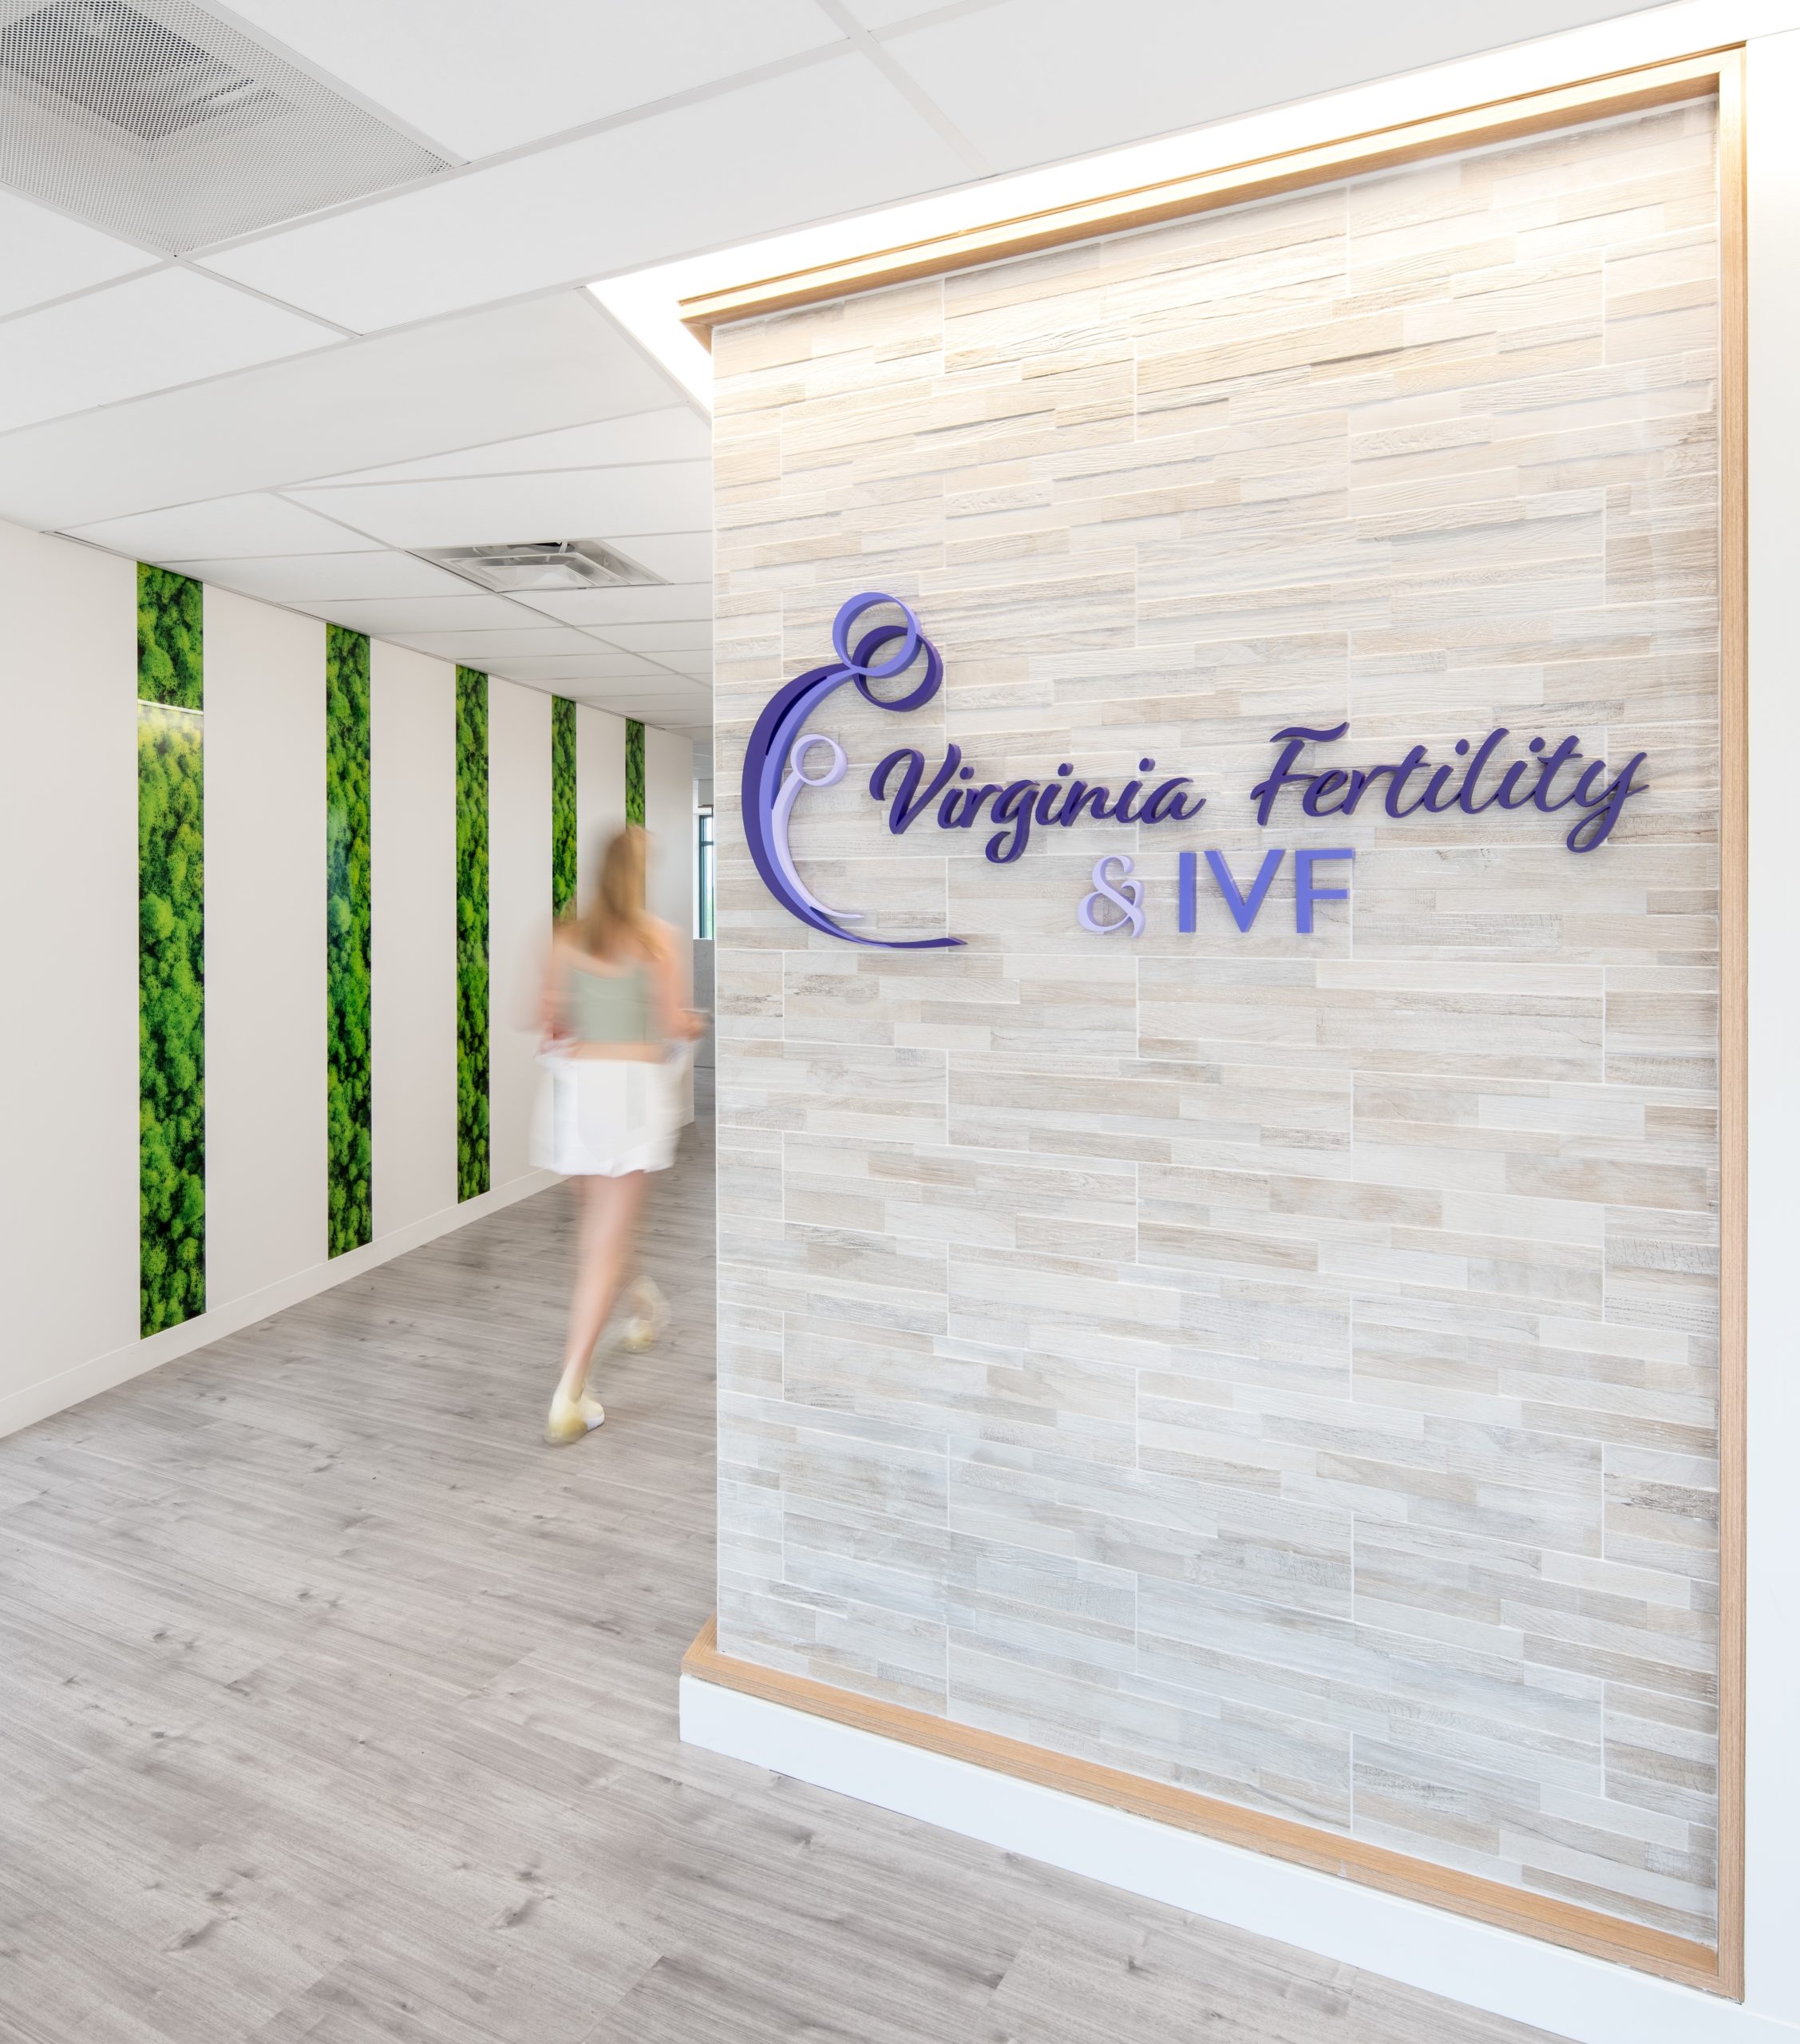 Entrance to Virginia Fertility & IVF